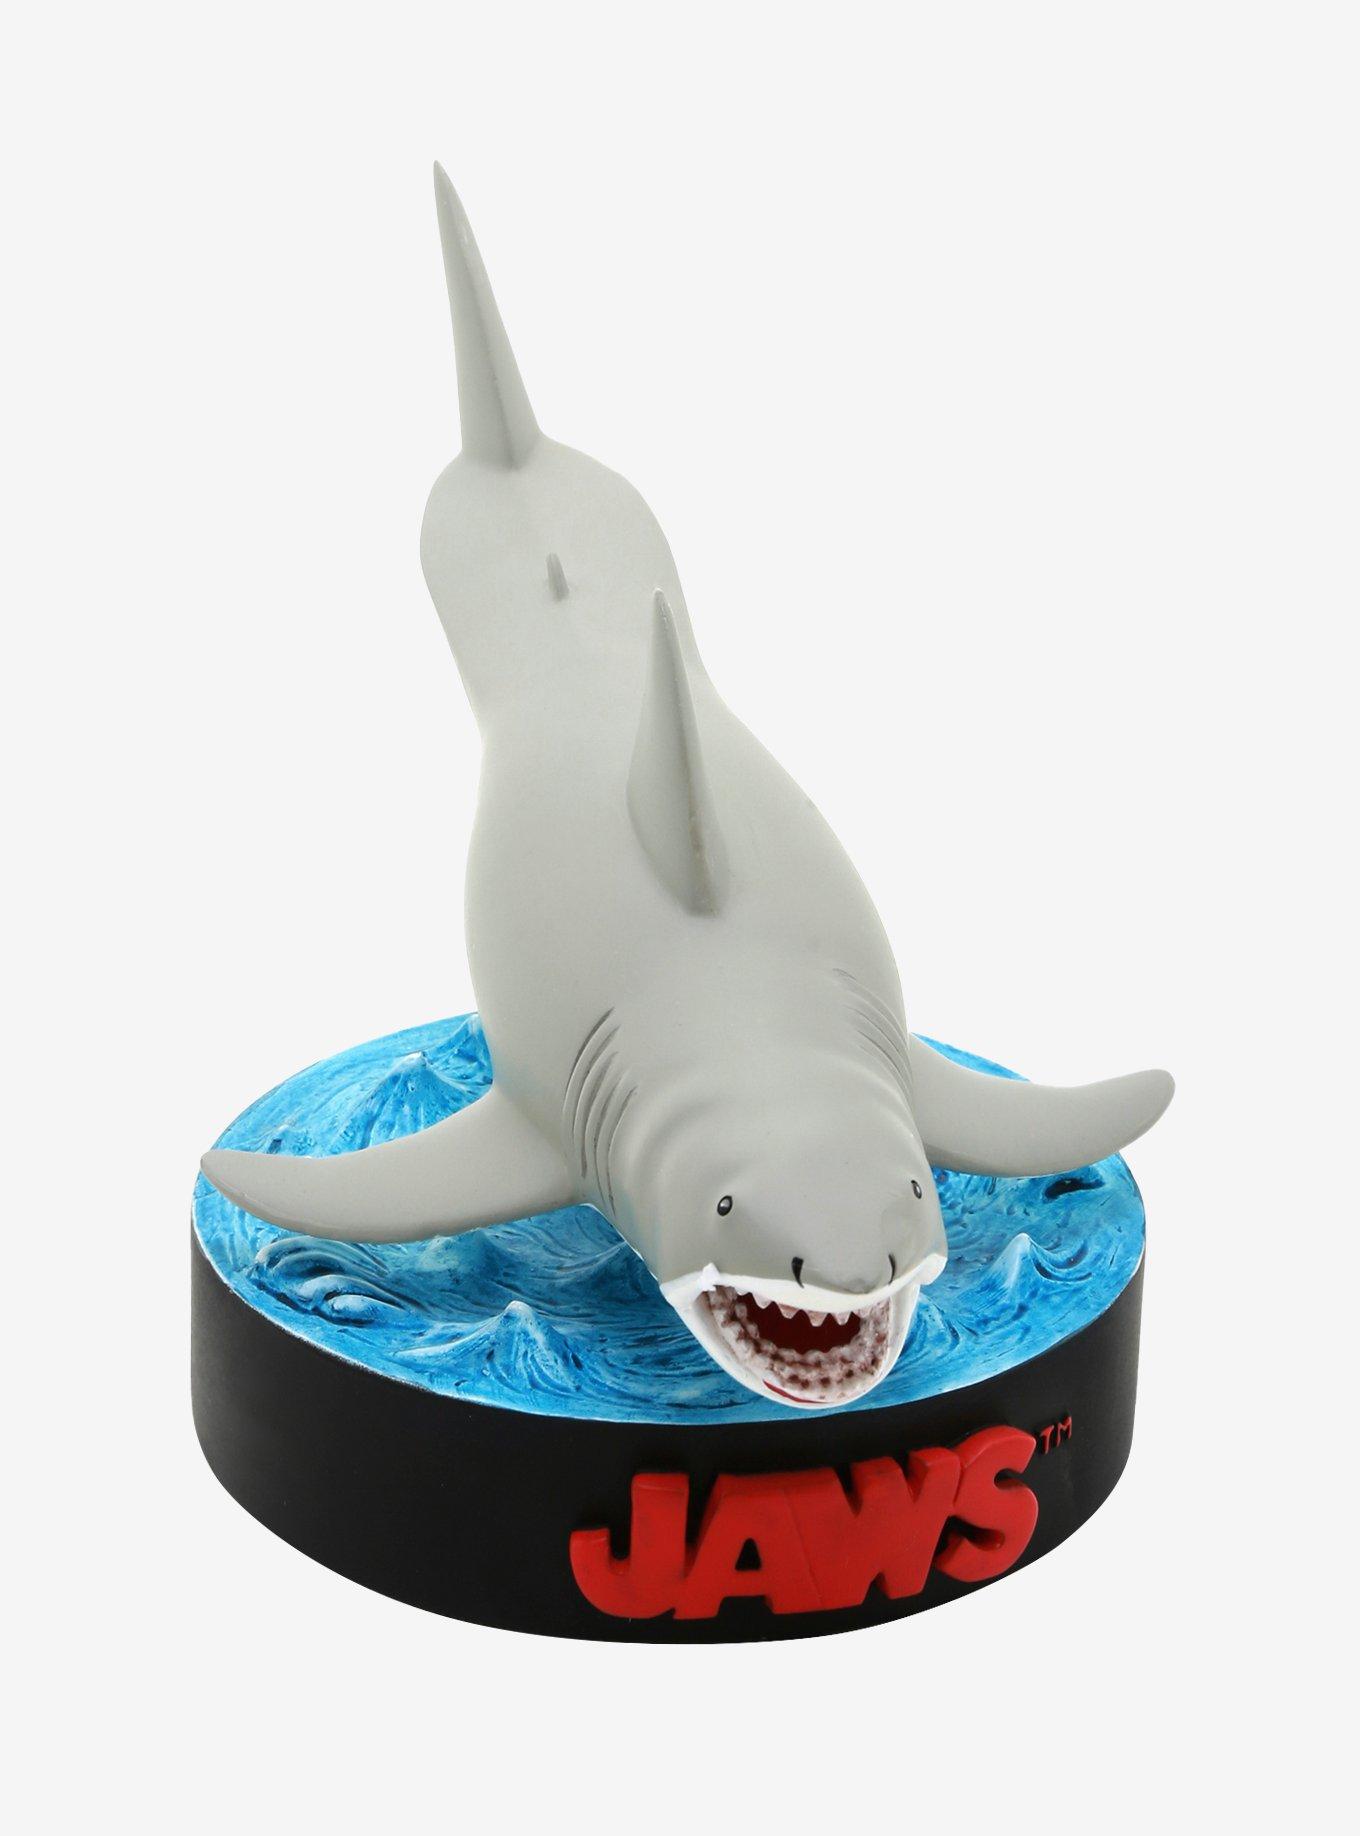 Authentic Universal Studios Hello Kitty Jaws Shark Scene Poster